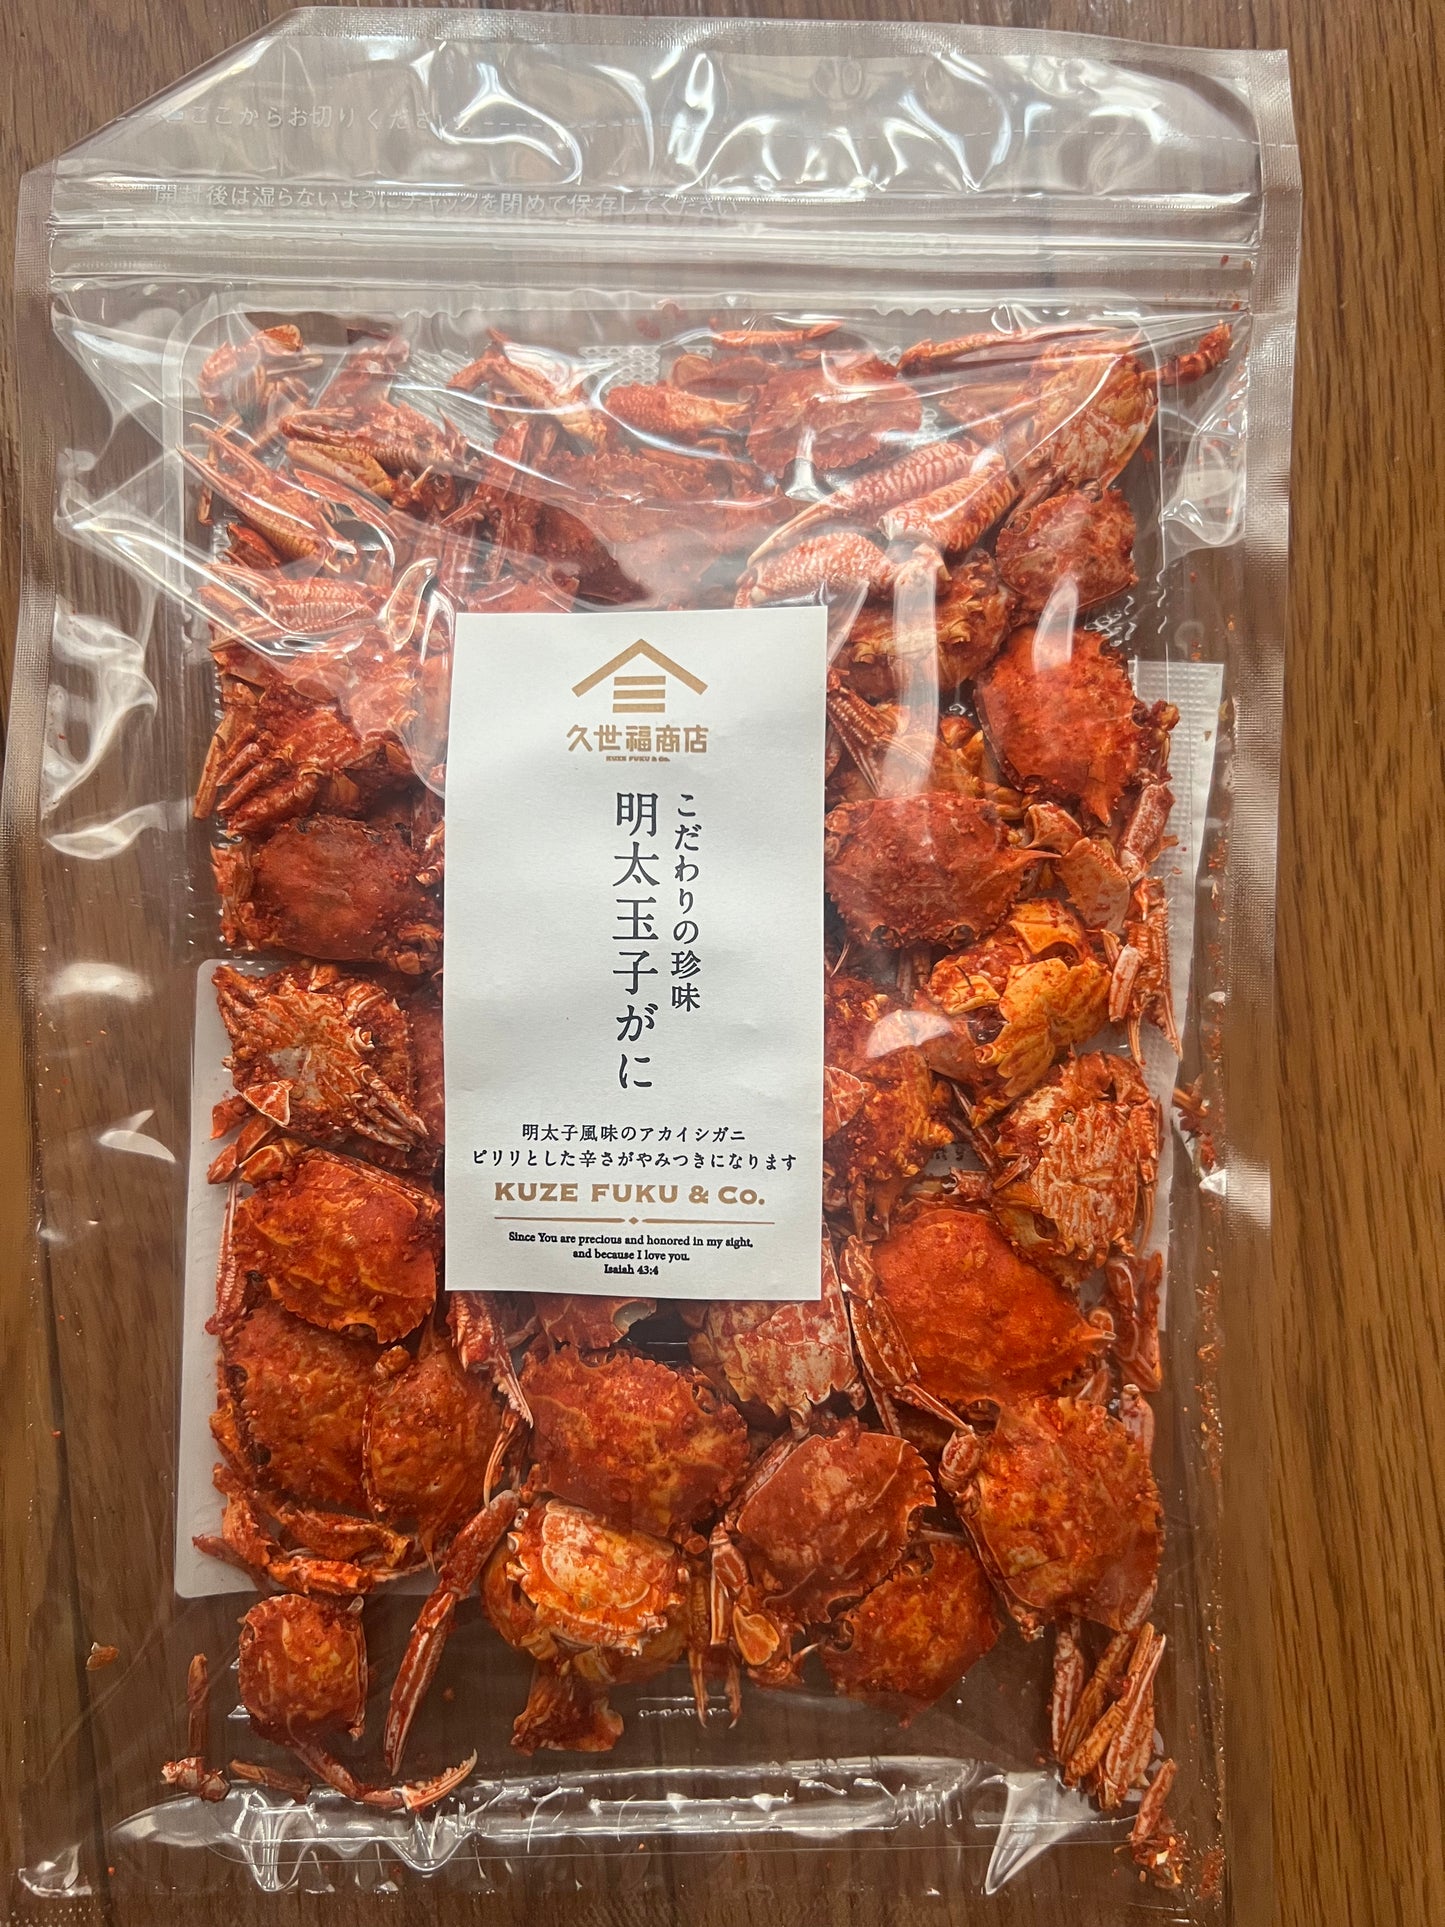 Japanese Snack Crab Crispy Fried Hot Spicy Fish Eggs Mentaiko Food KUZE FUKU 52g